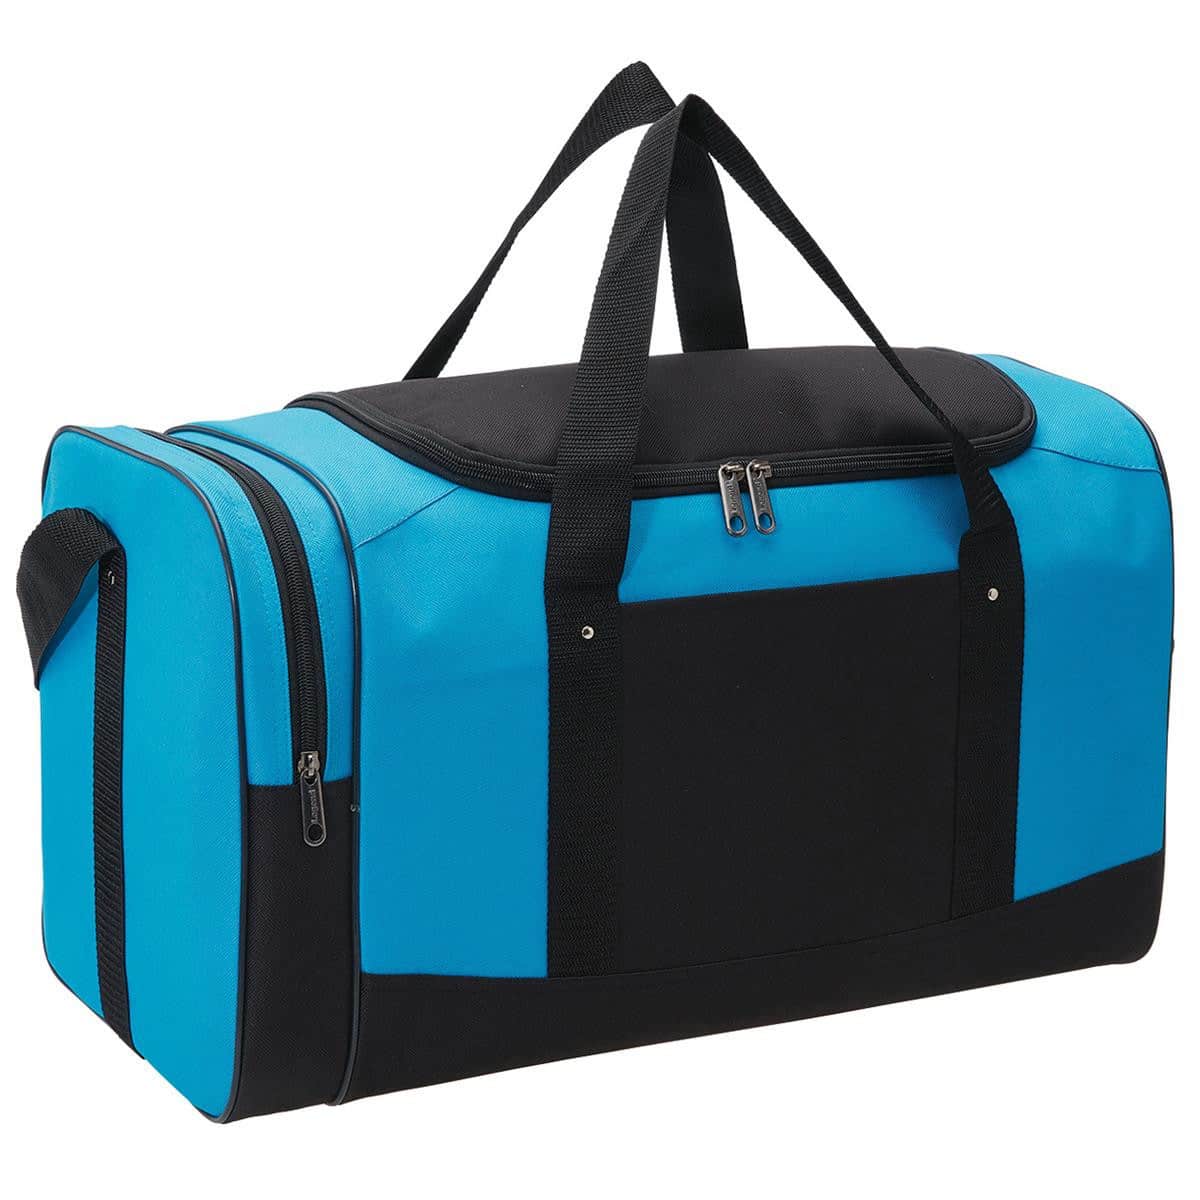 Aqua/Black Spark Sports Bag